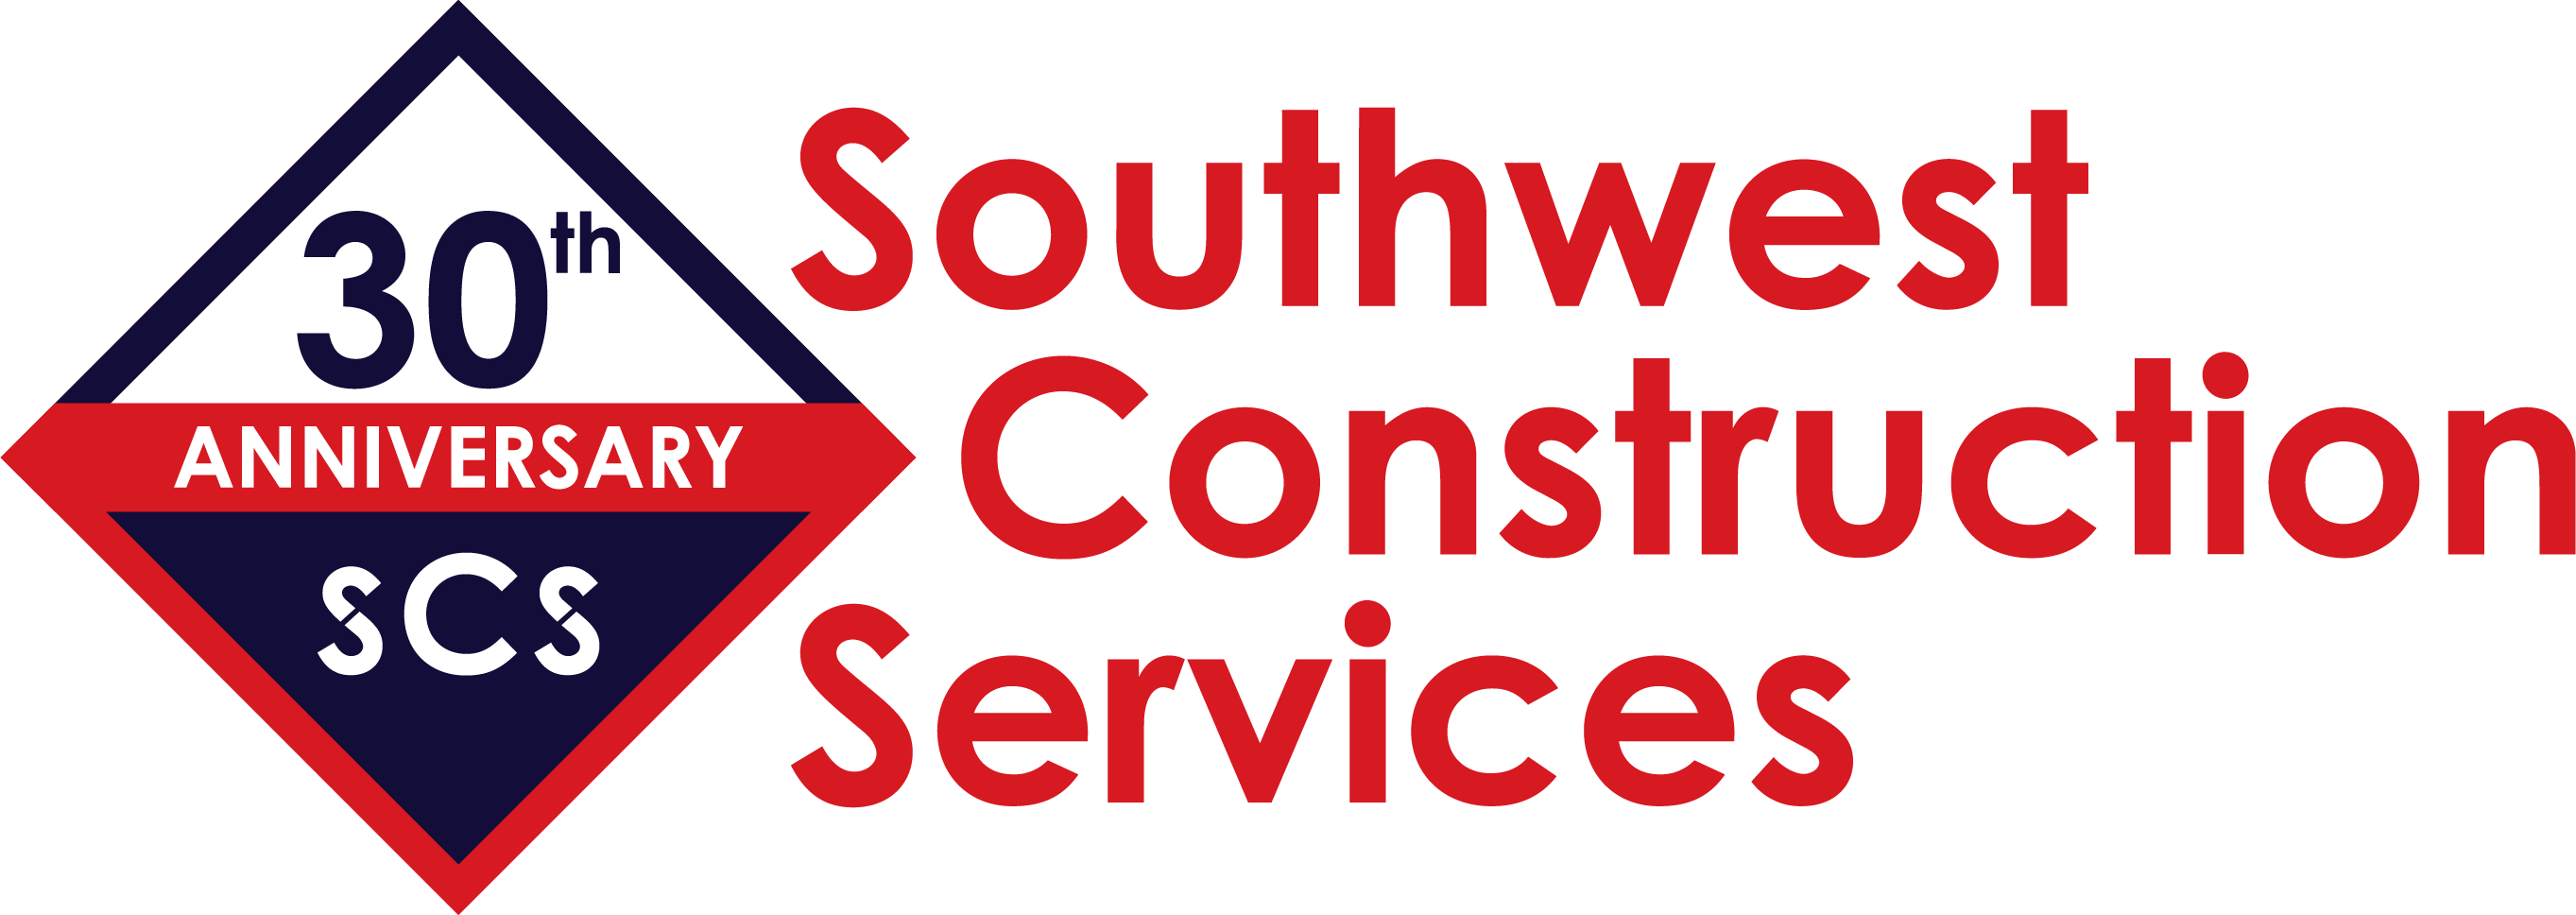 Southwest Construction Services 30 year logo